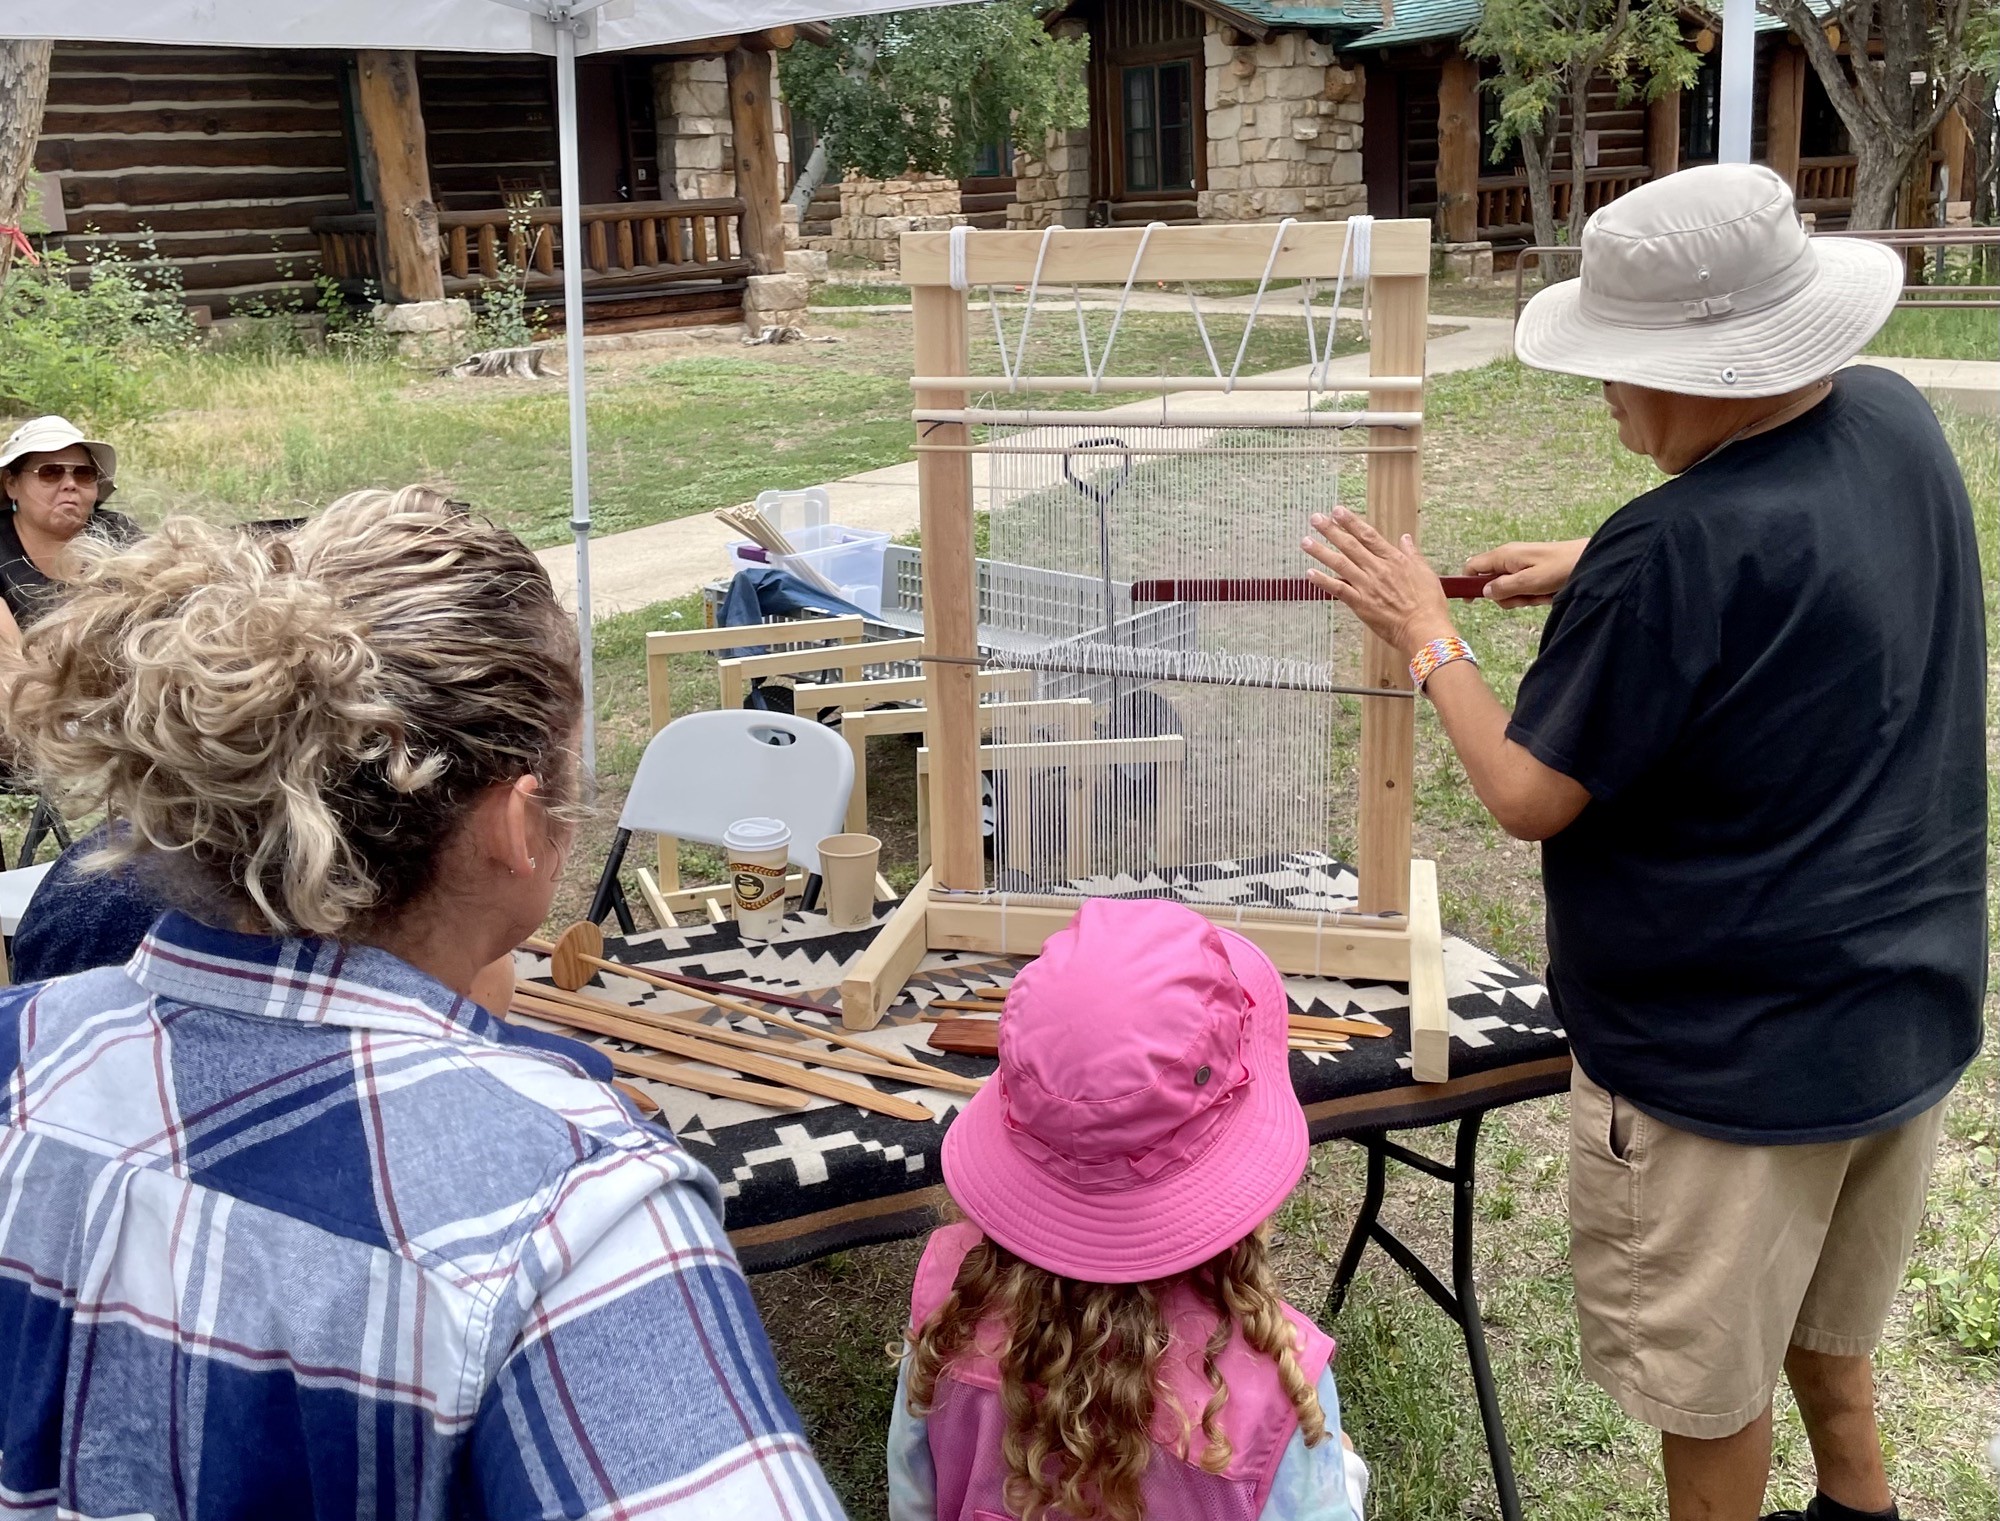 Lyle Harvey shows visitors weaving techniques on a loom